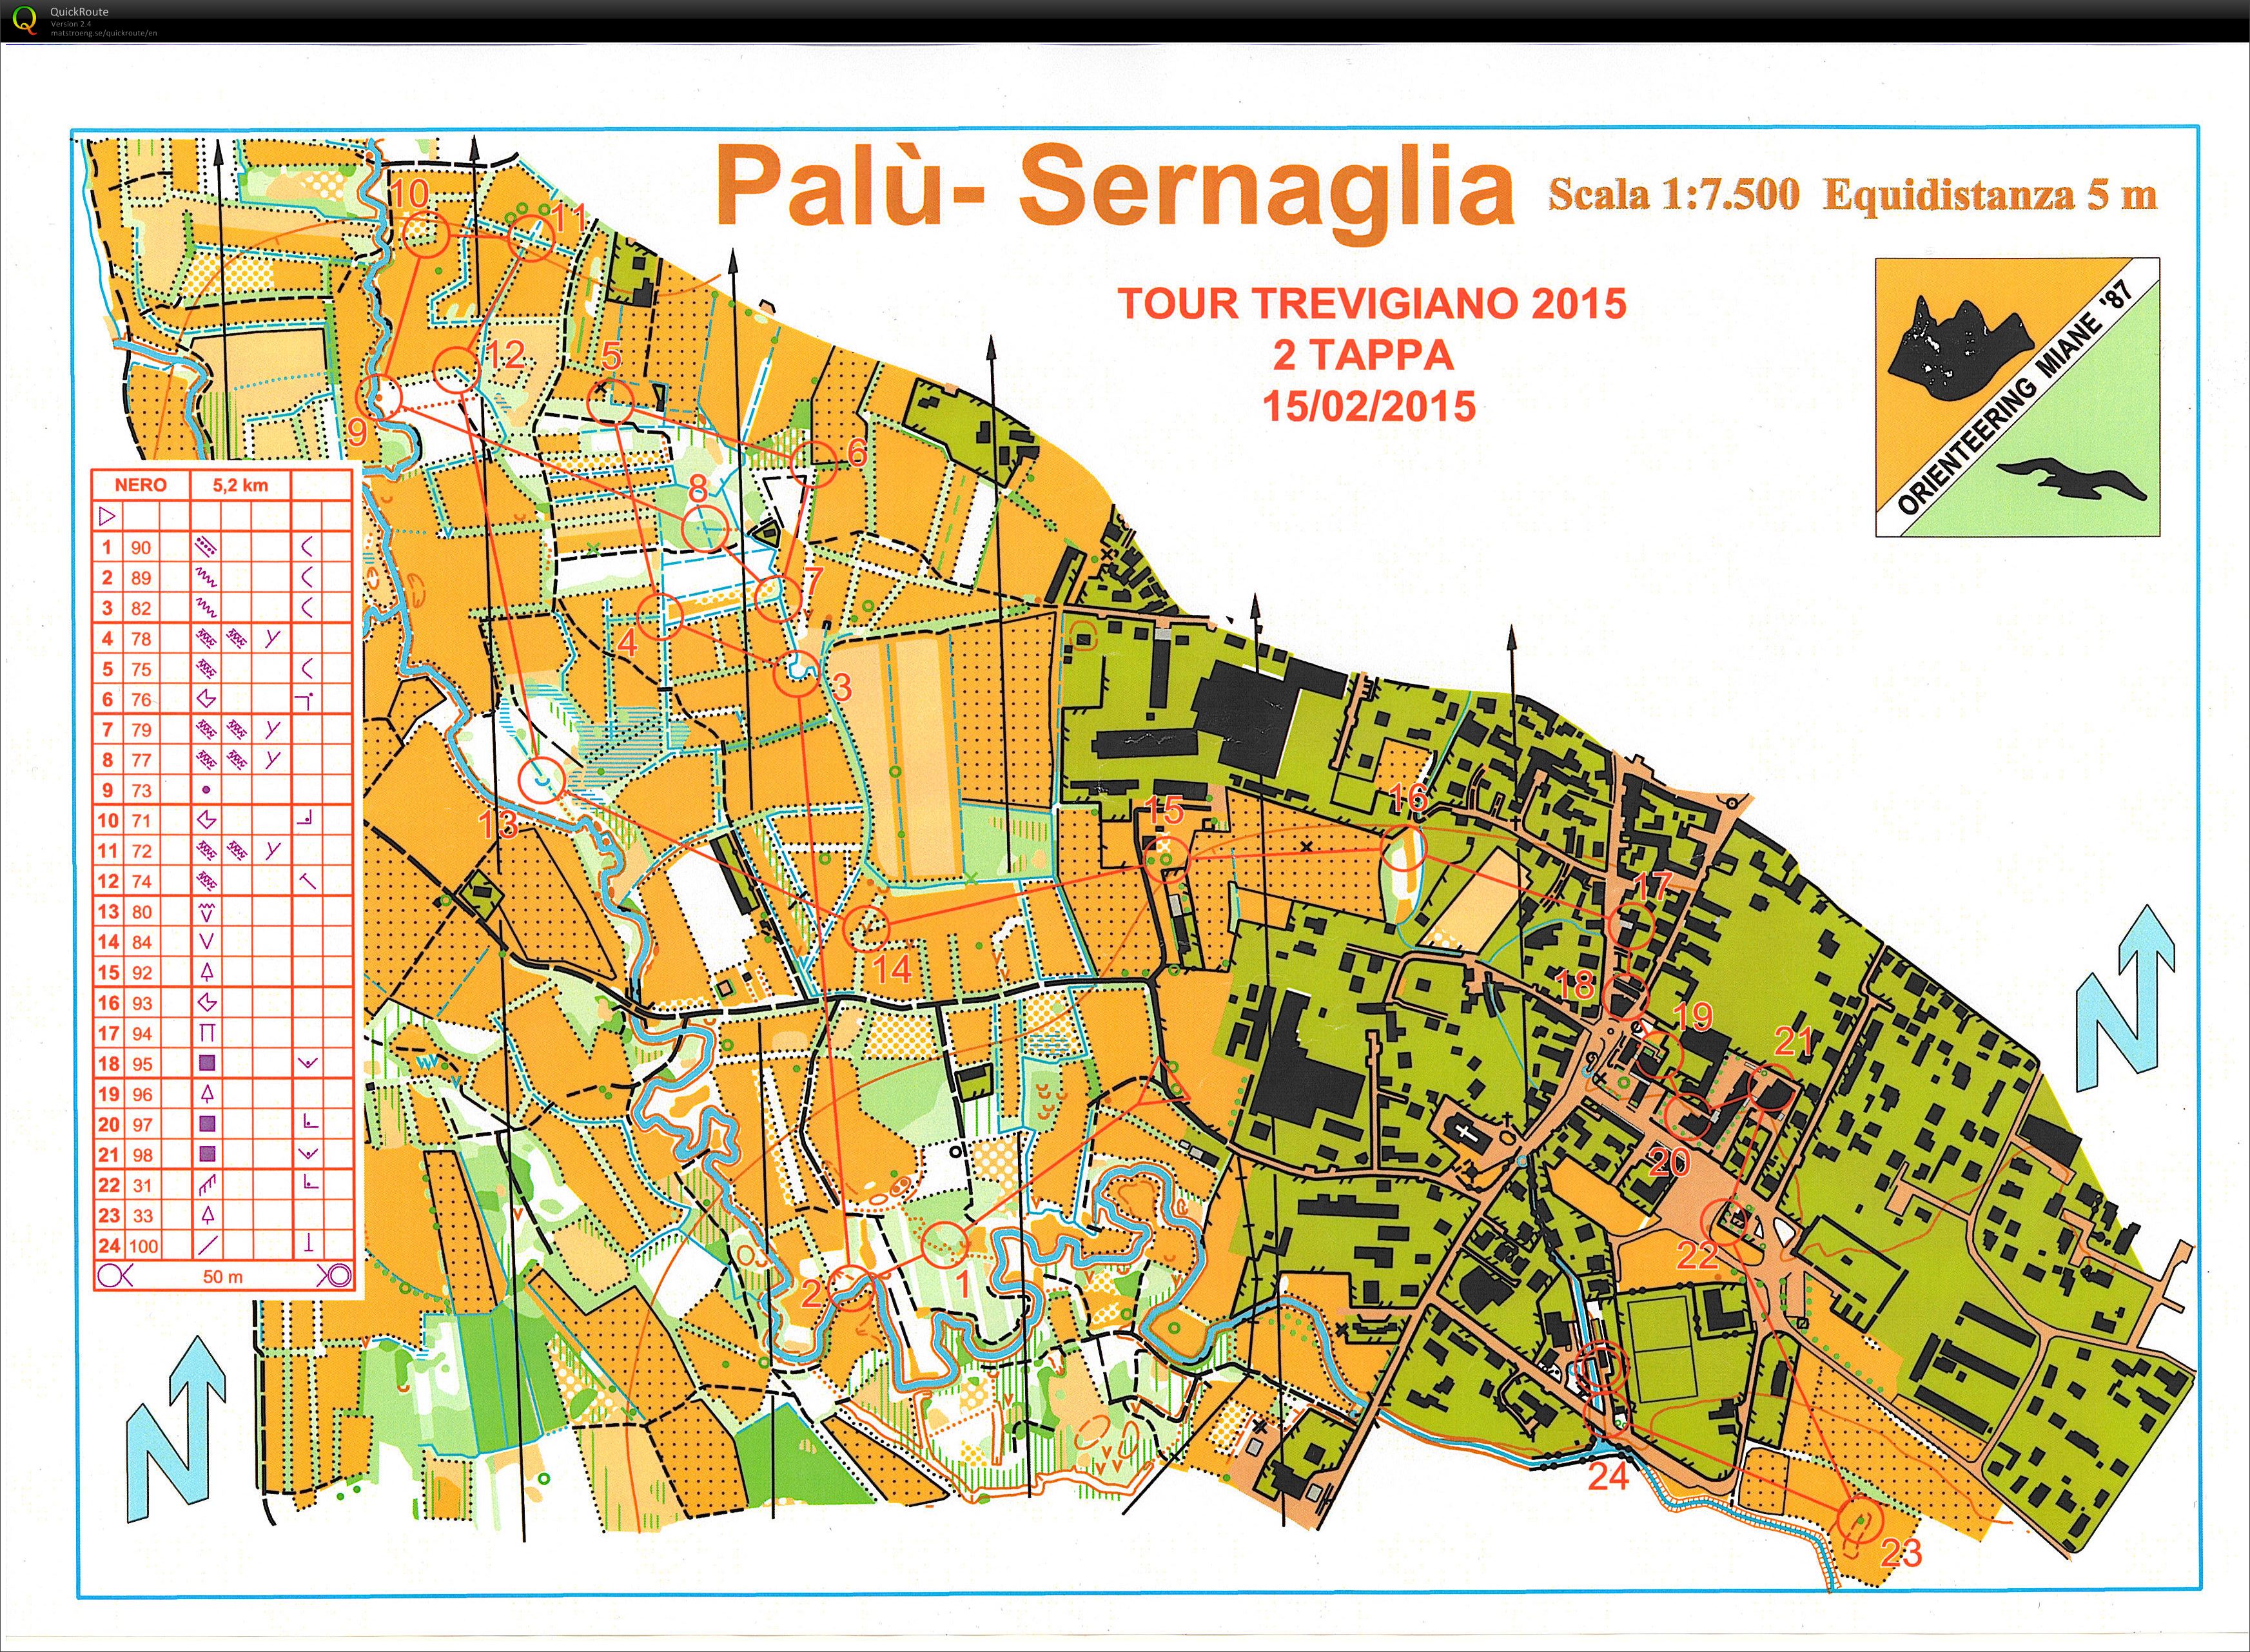 2a prova Tour Trevigiano 2015 (15/02/2015)